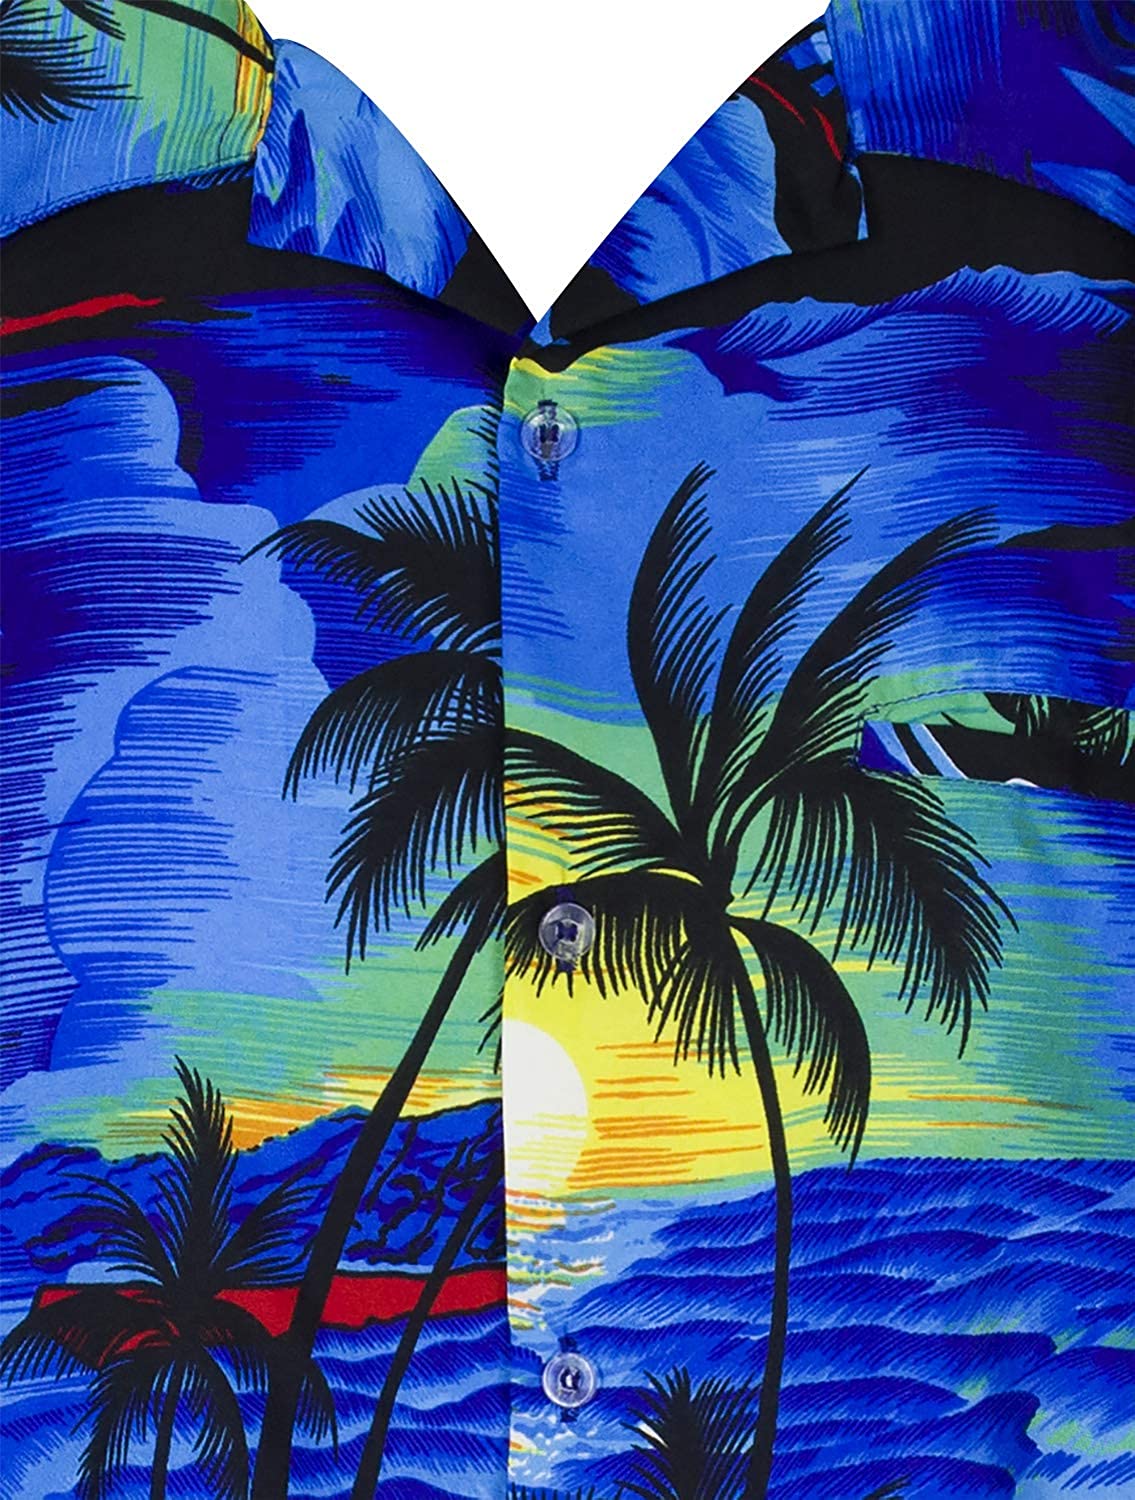 Herren Hawaiihemd Coconut Tree Lustig